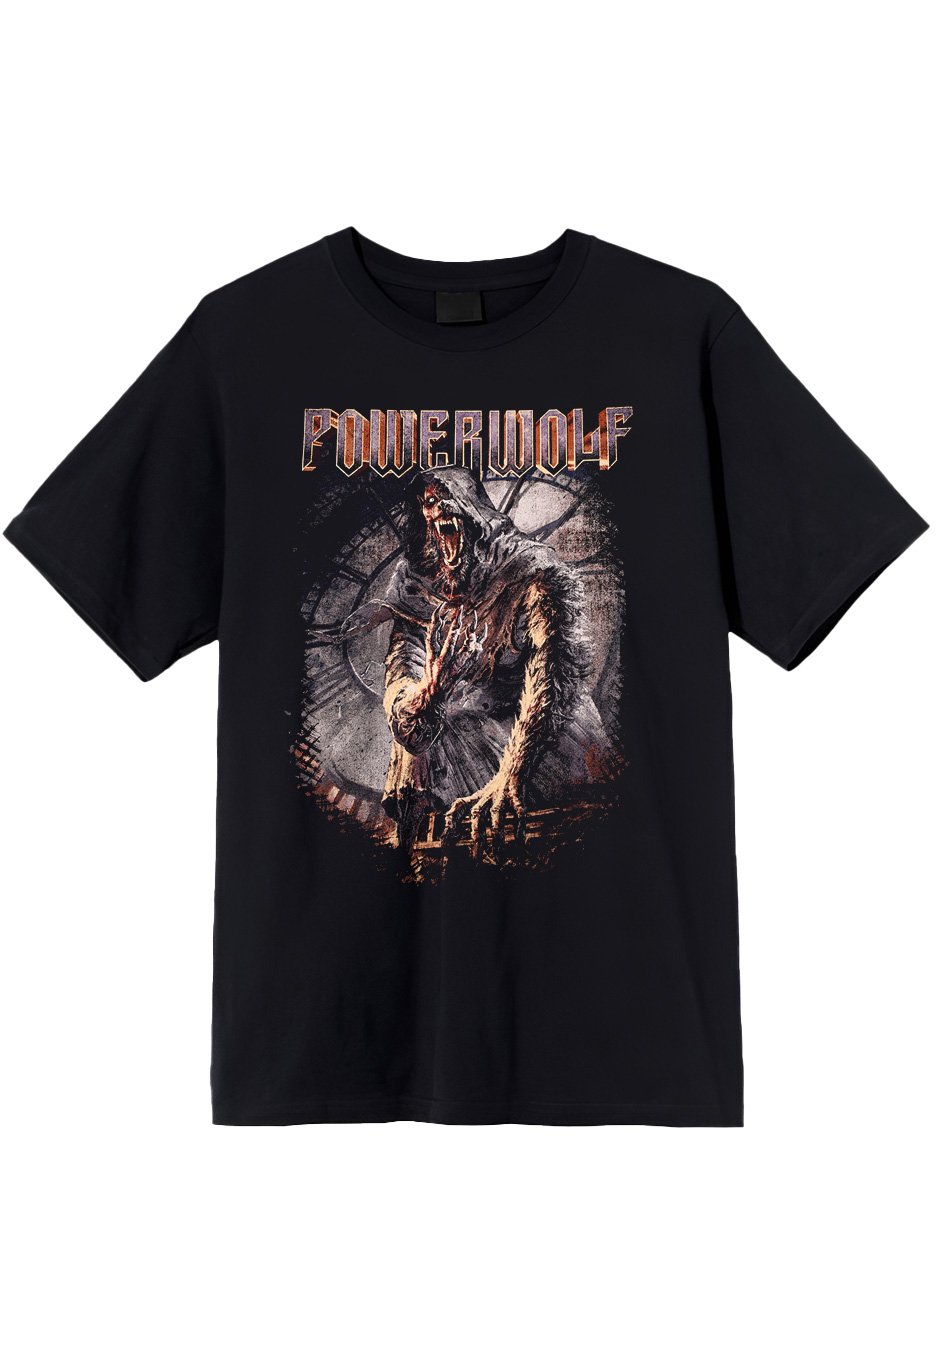 Powerwolf - No Prayer On Midnight - T-Shirt